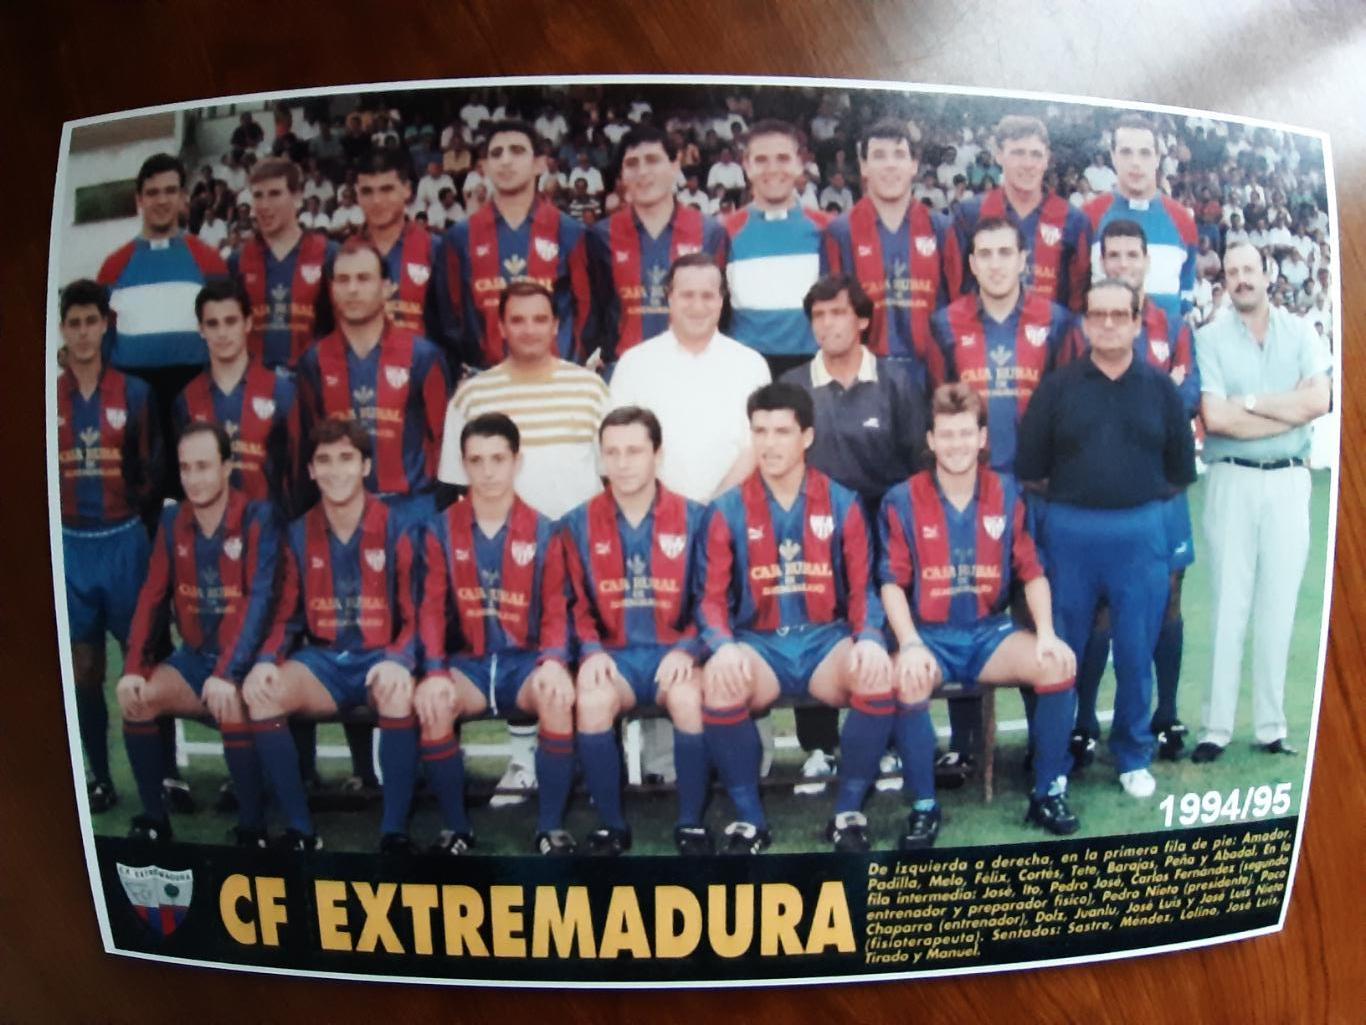 EXTREMADURA1994/95 (SPAIN)